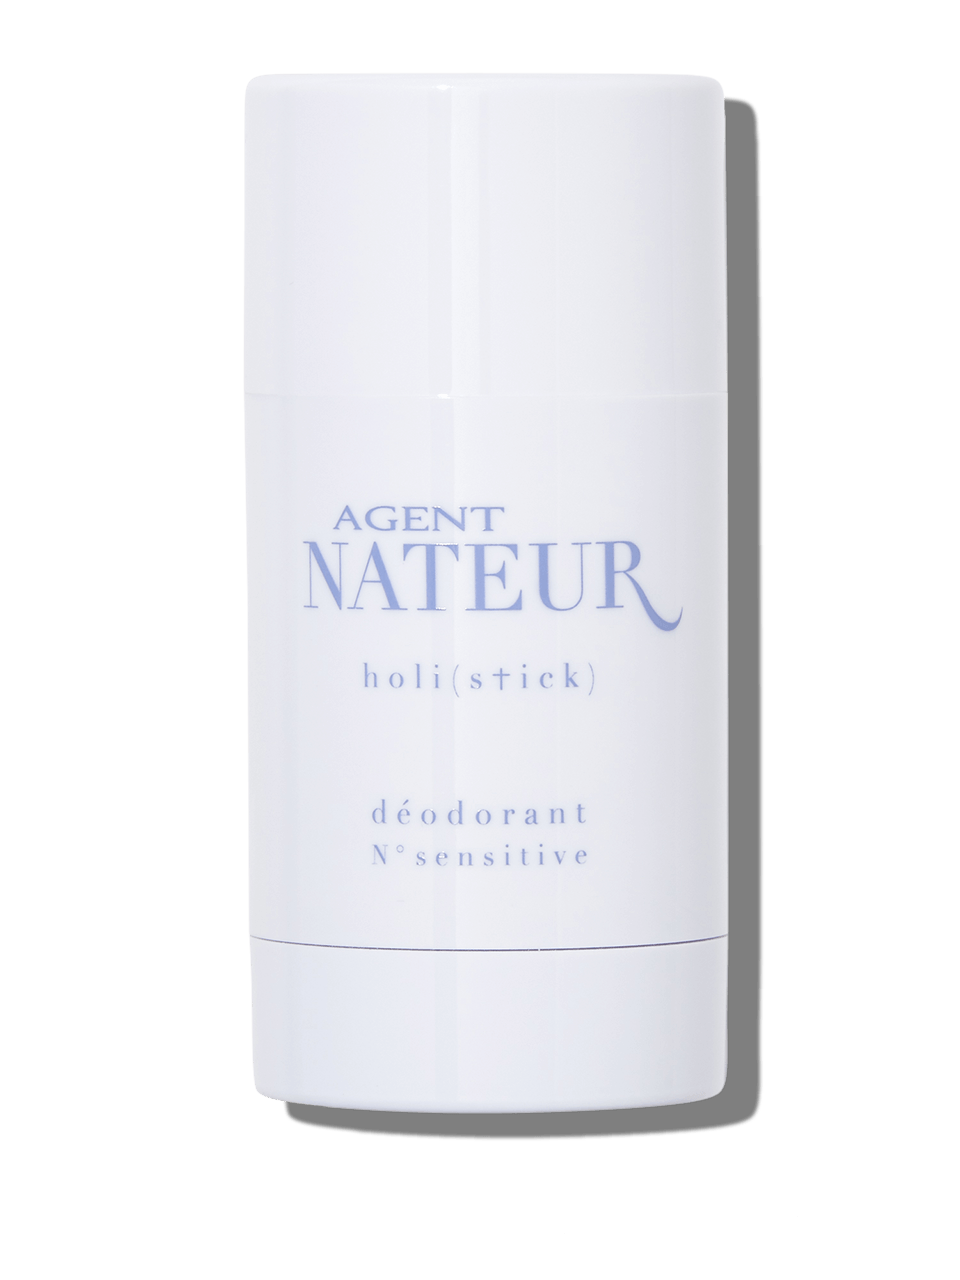 holi (stick) sensitive deodorant BODY CARE Agent Nateur 